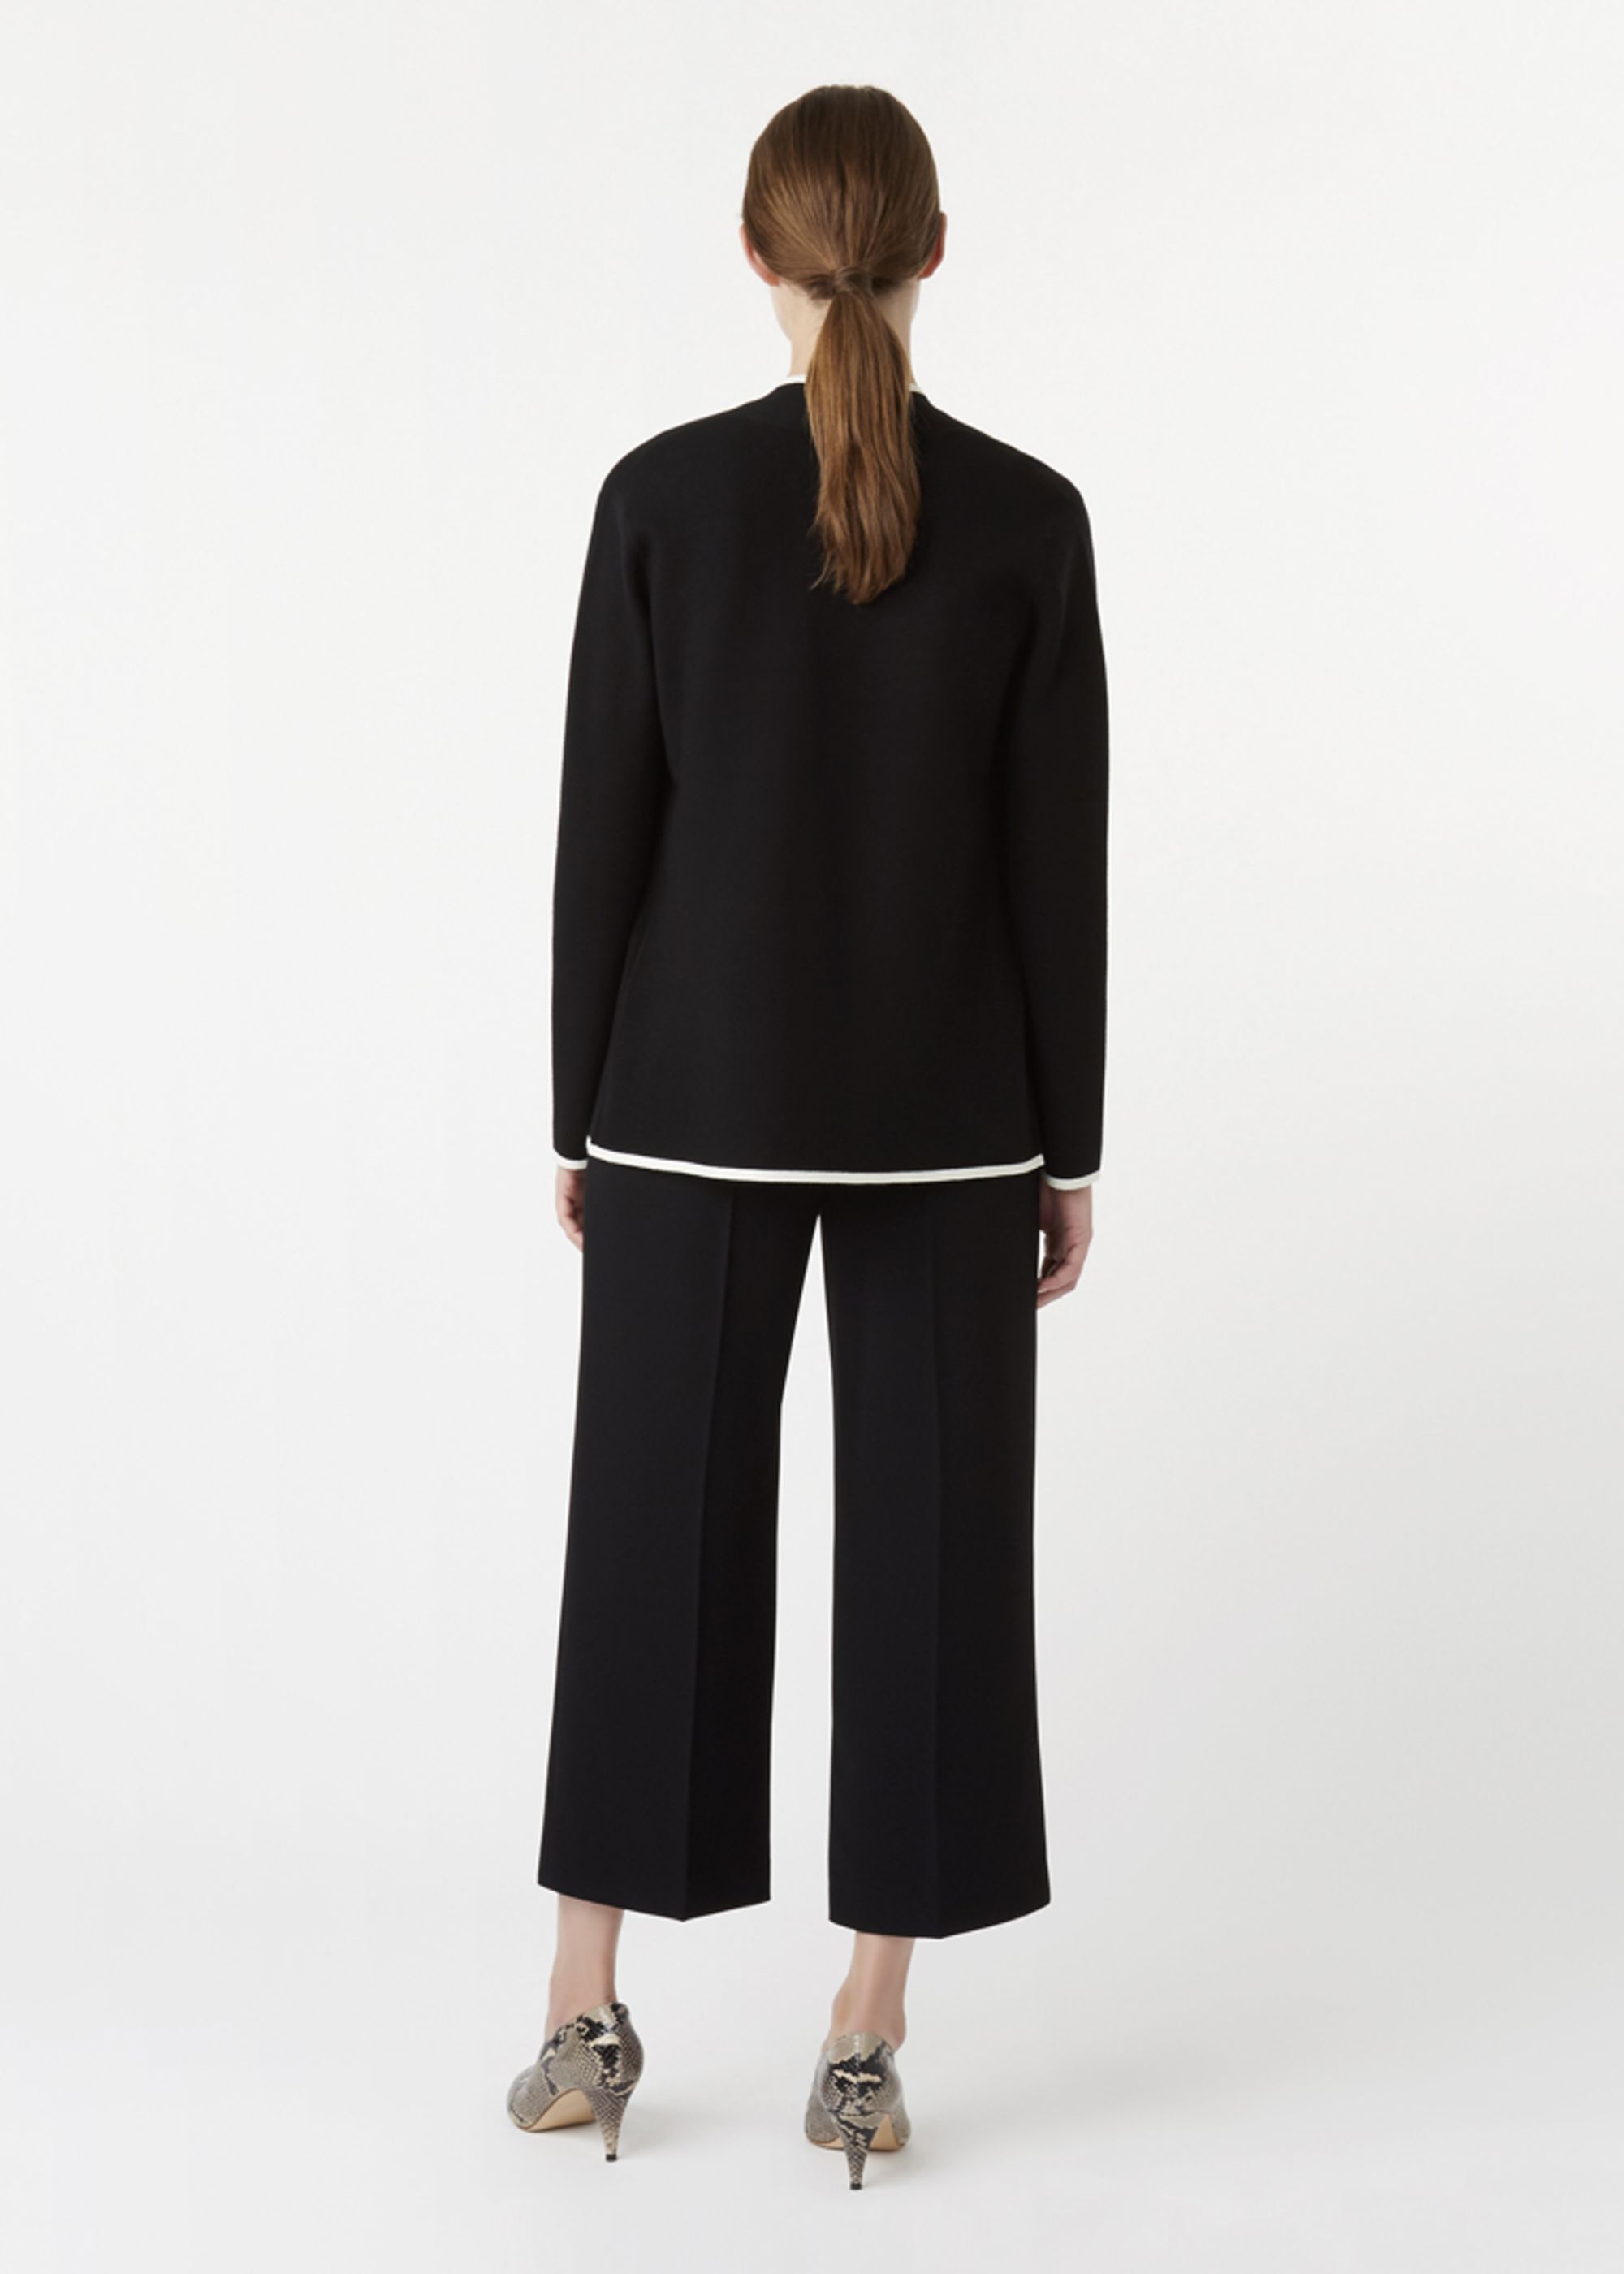 Hobbs Monica Knitted Jacket Cardigan Long Sleeve | eBay